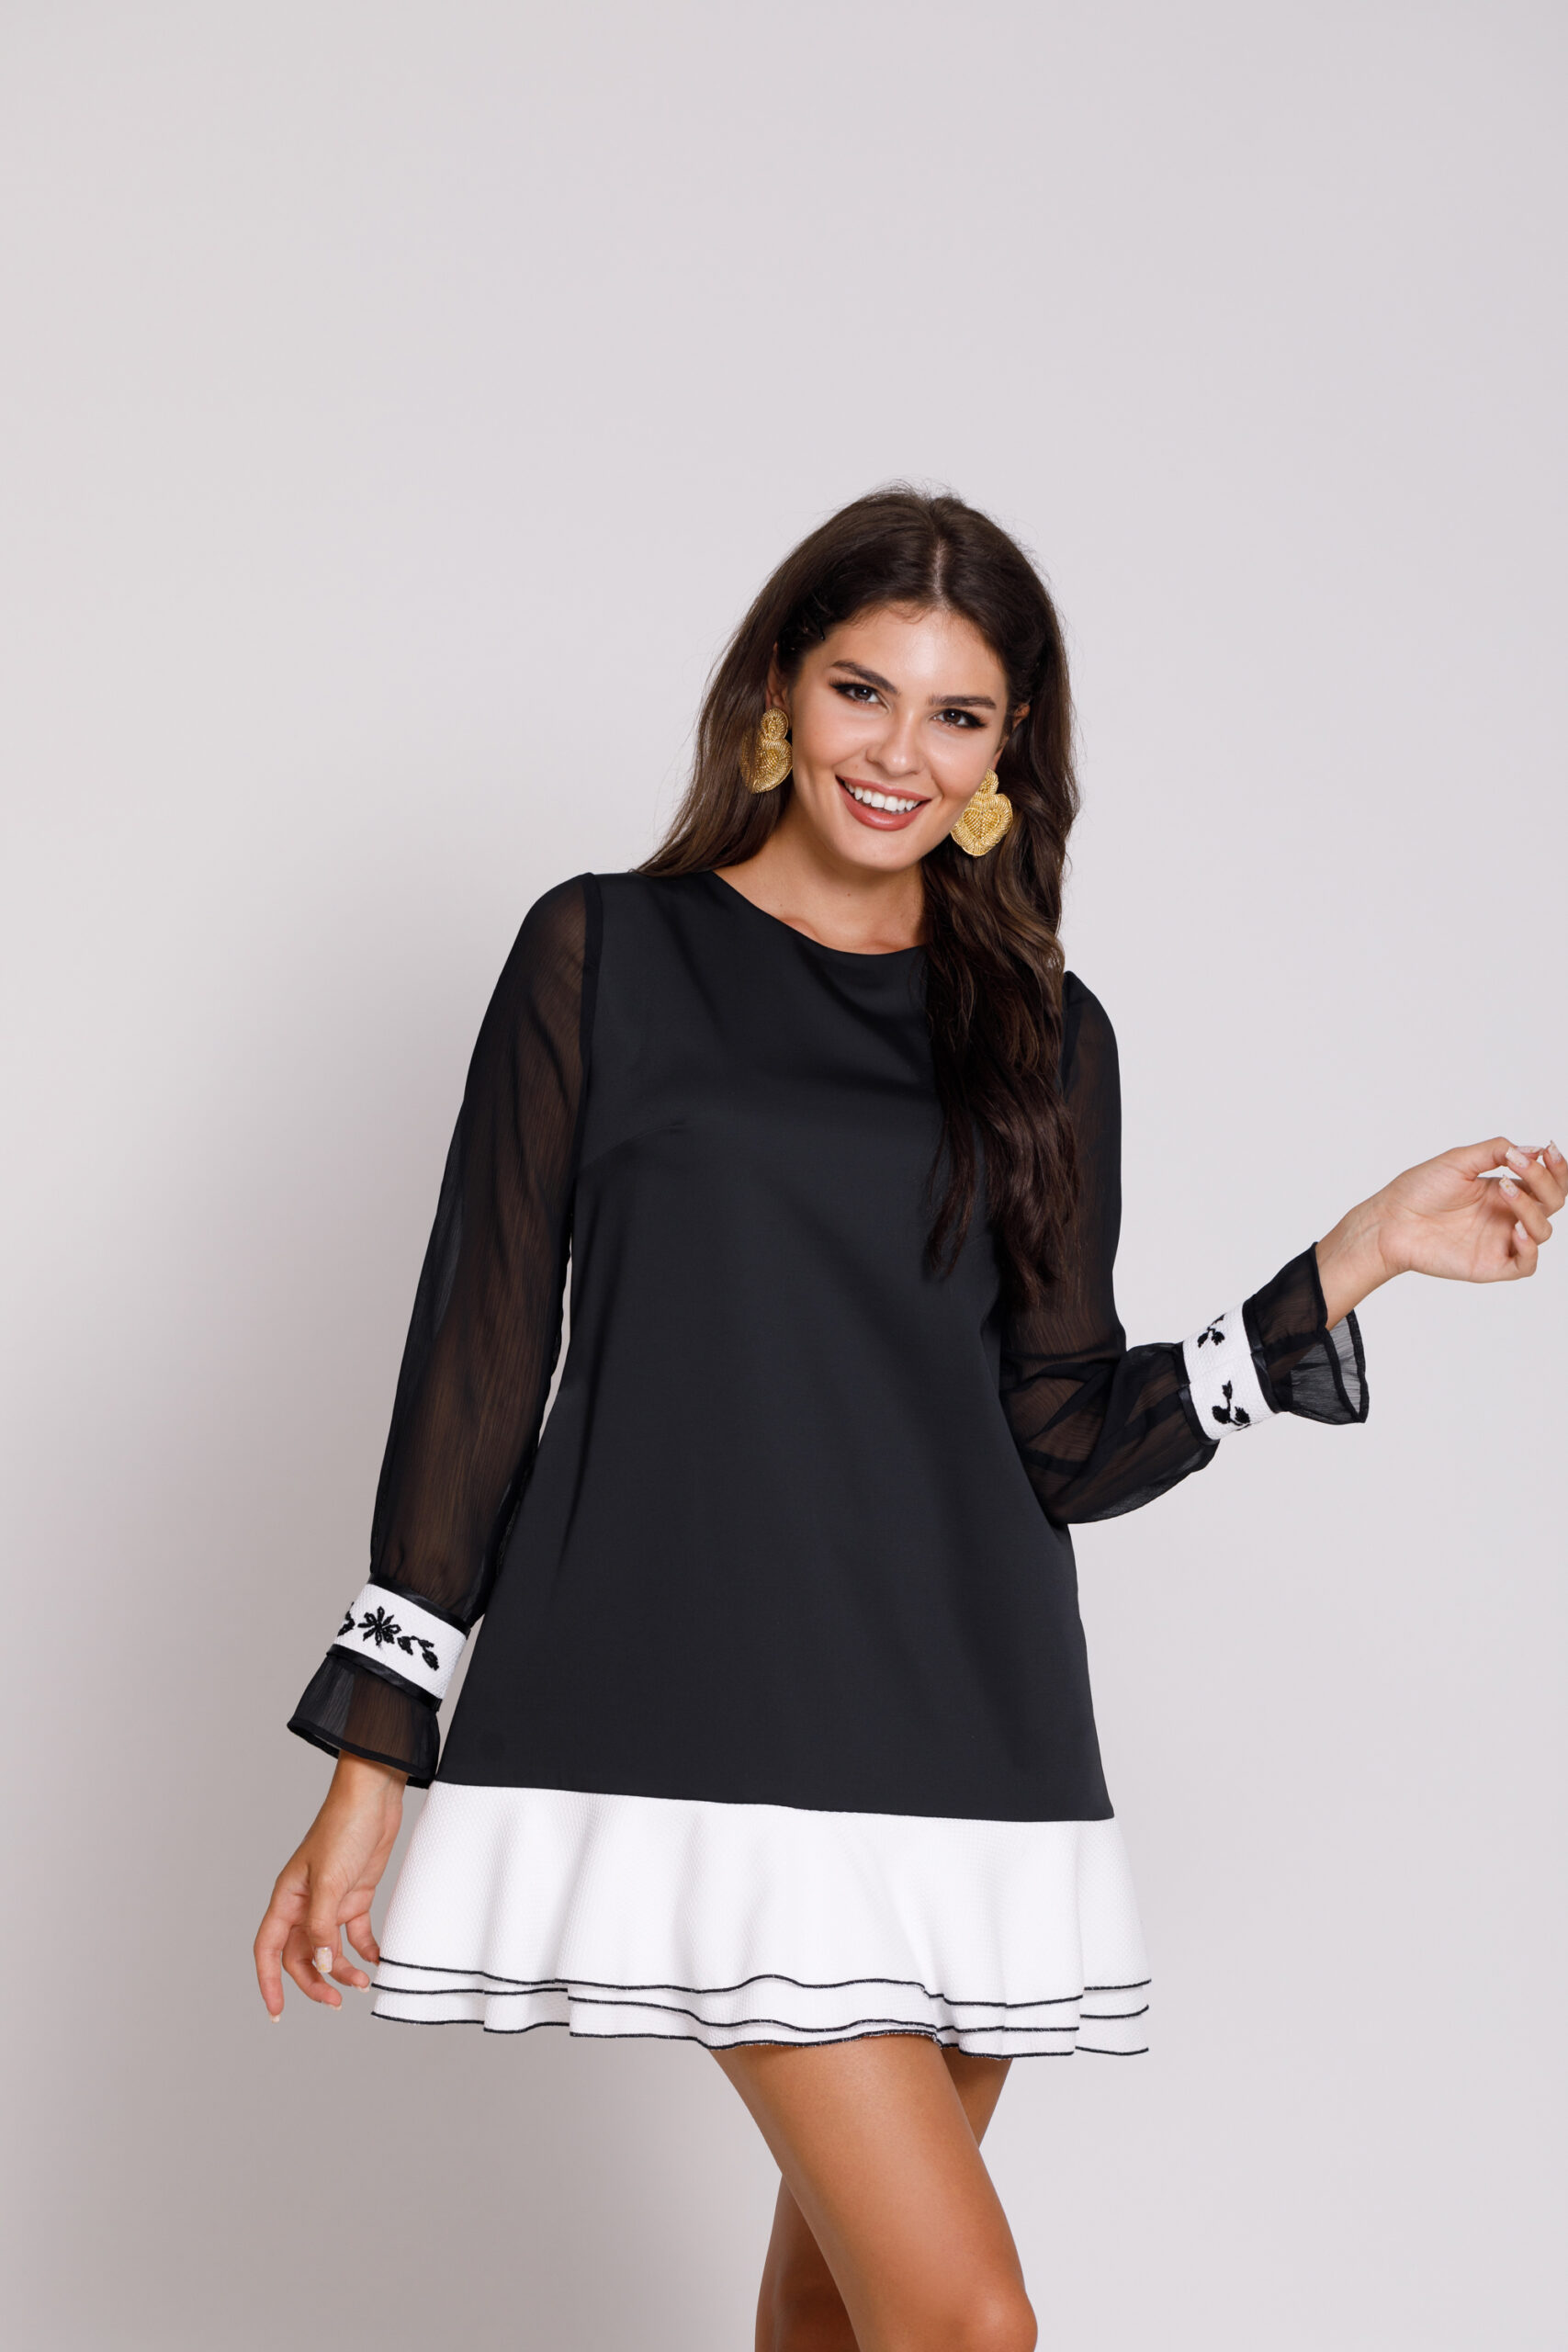 DENISE Elegant black and white dress with ruffles. Natural fabrics, original design, handmade embroidery